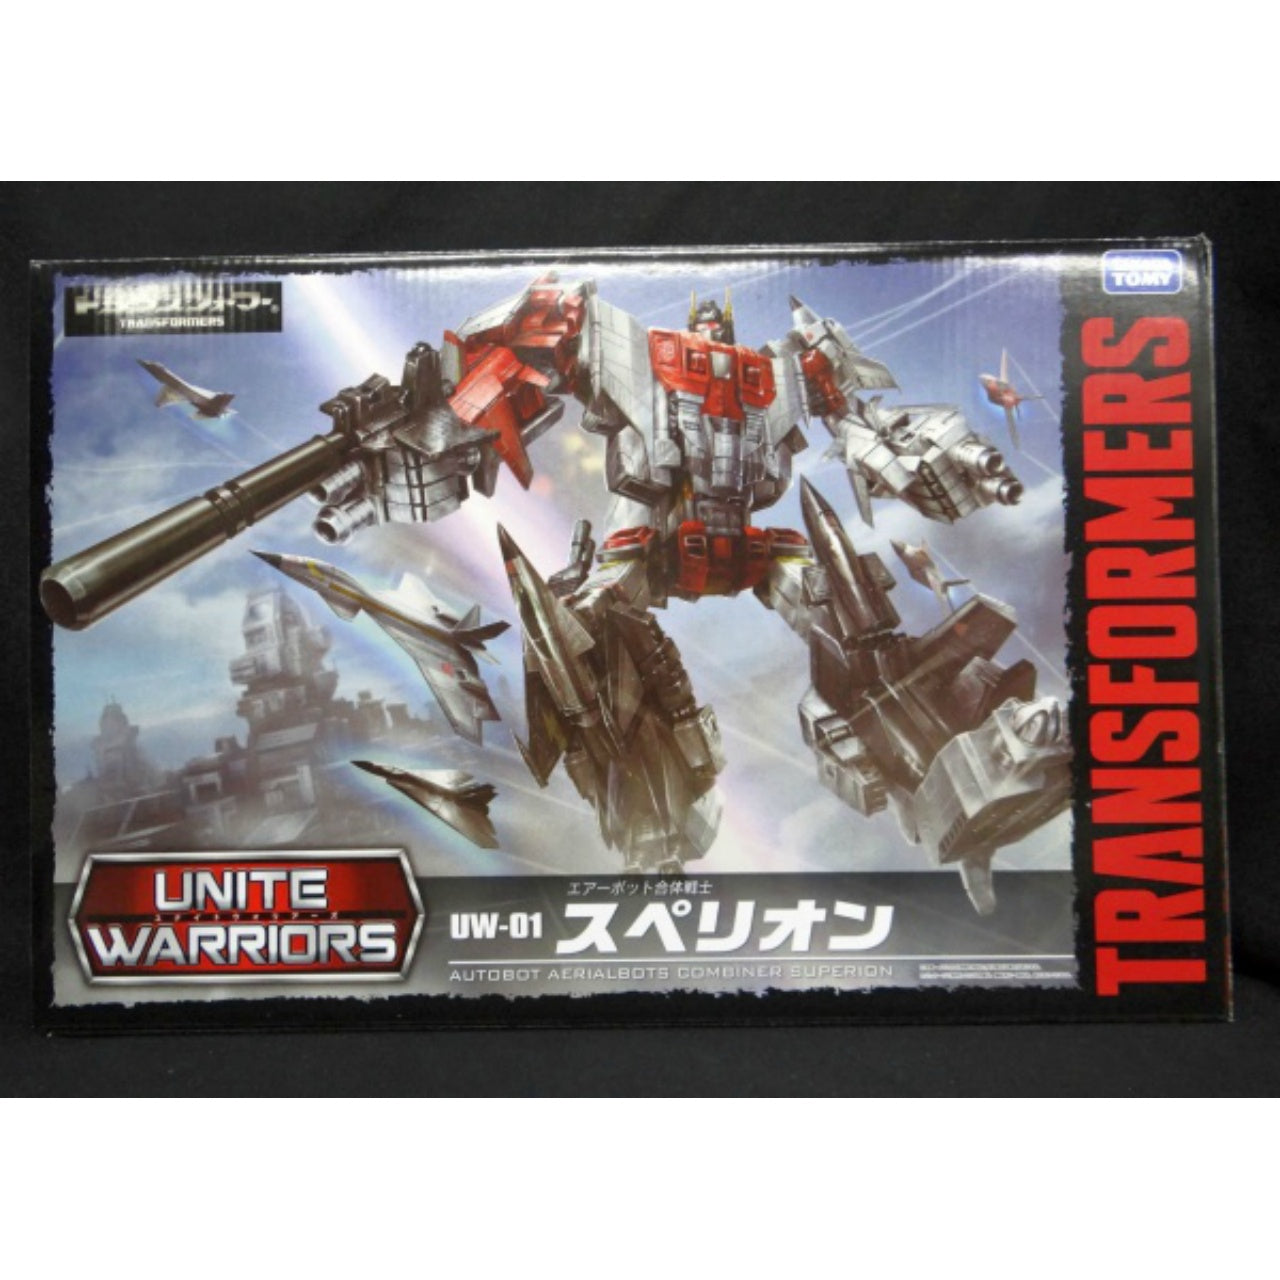 Transformers - Unite Warriors - UW01 - Superion